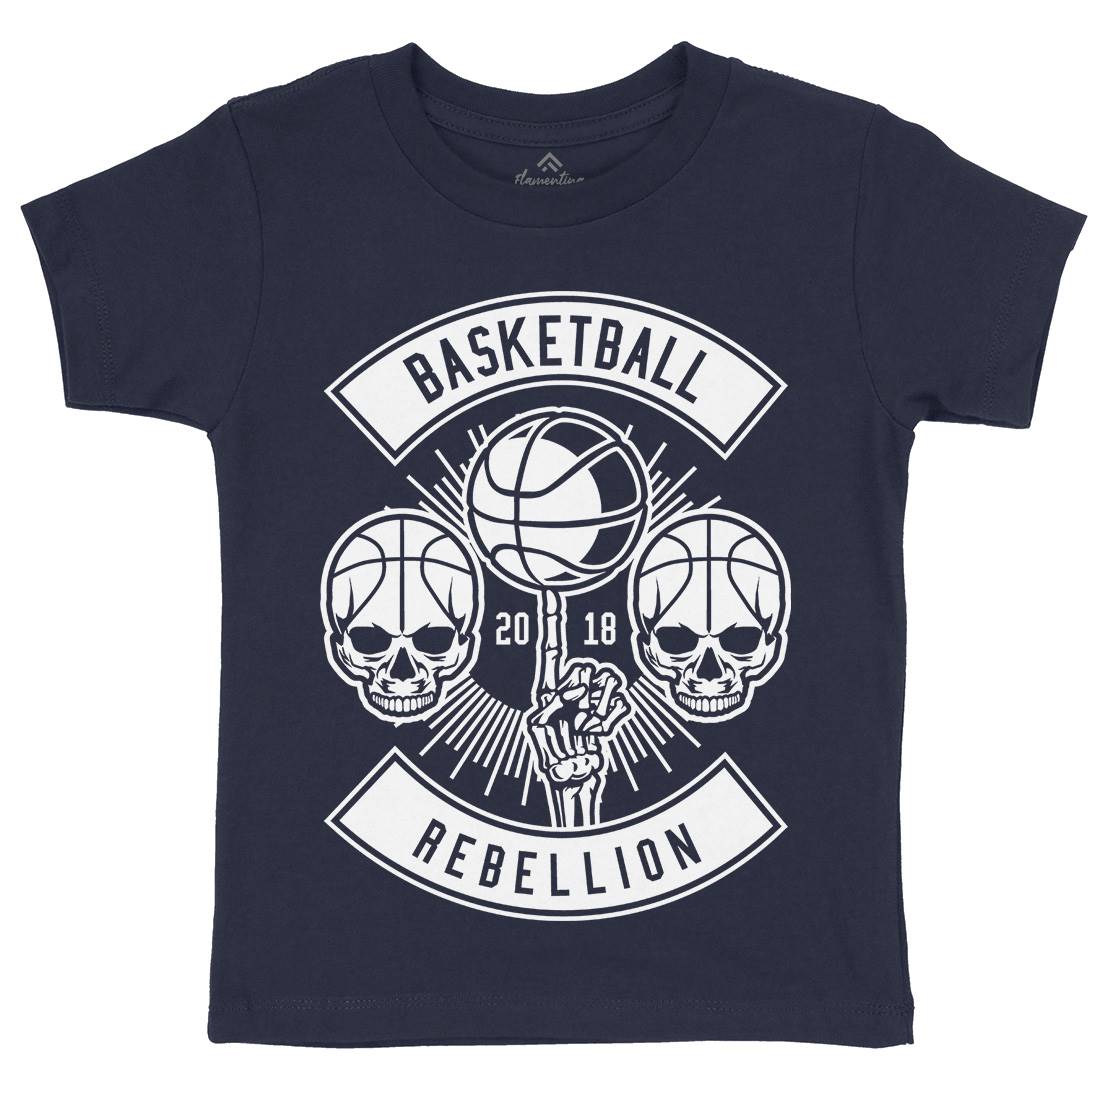 Basketball Rebellion Kids Crew Neck T-Shirt Sport B492